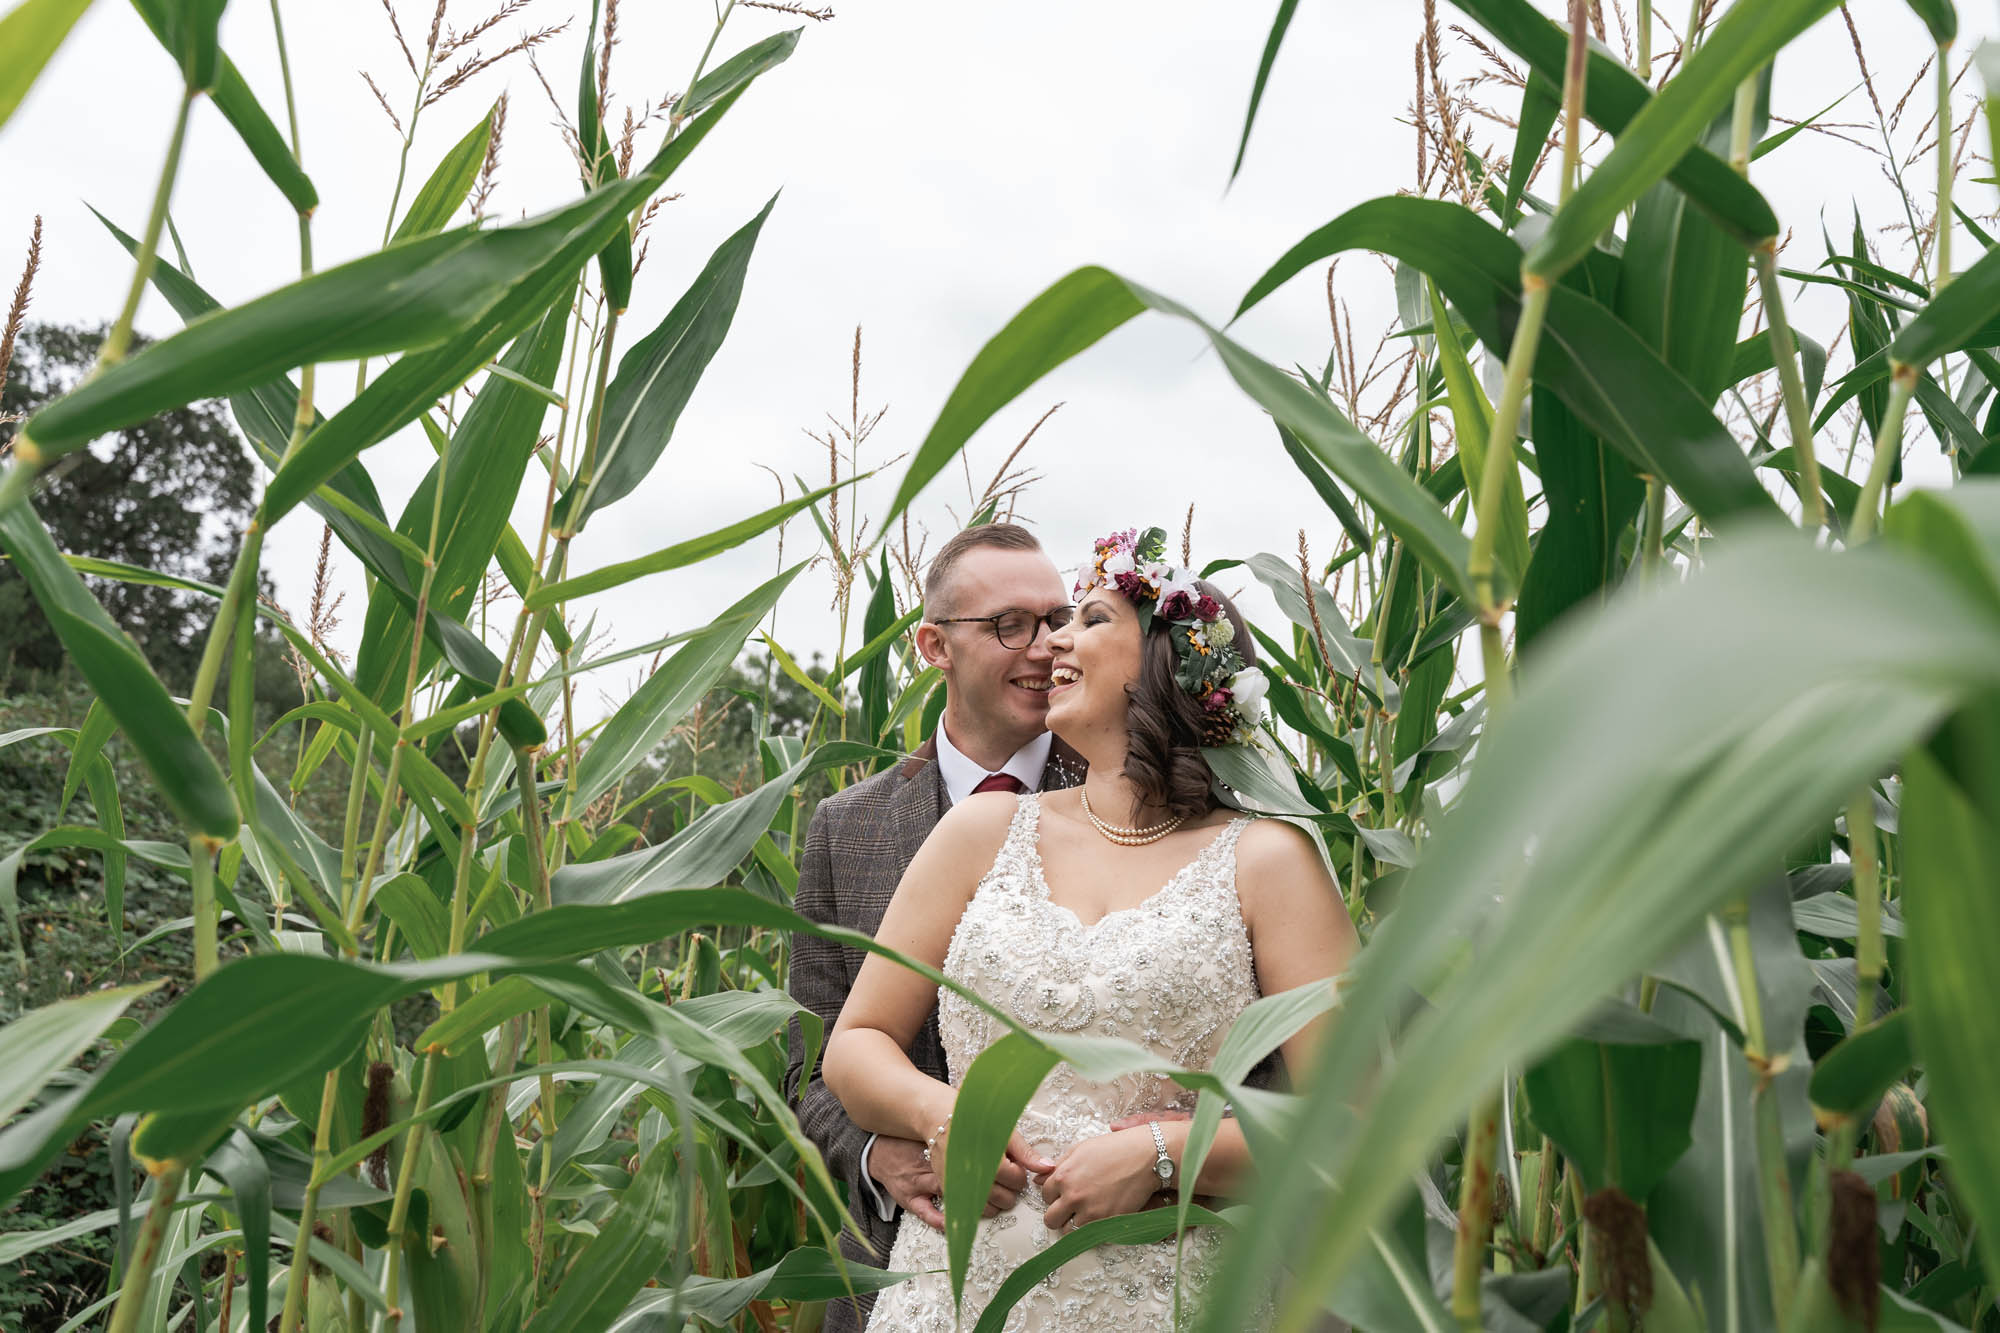 Real Wedding at Shustoke Farm Barns by Stephen Williams Photography